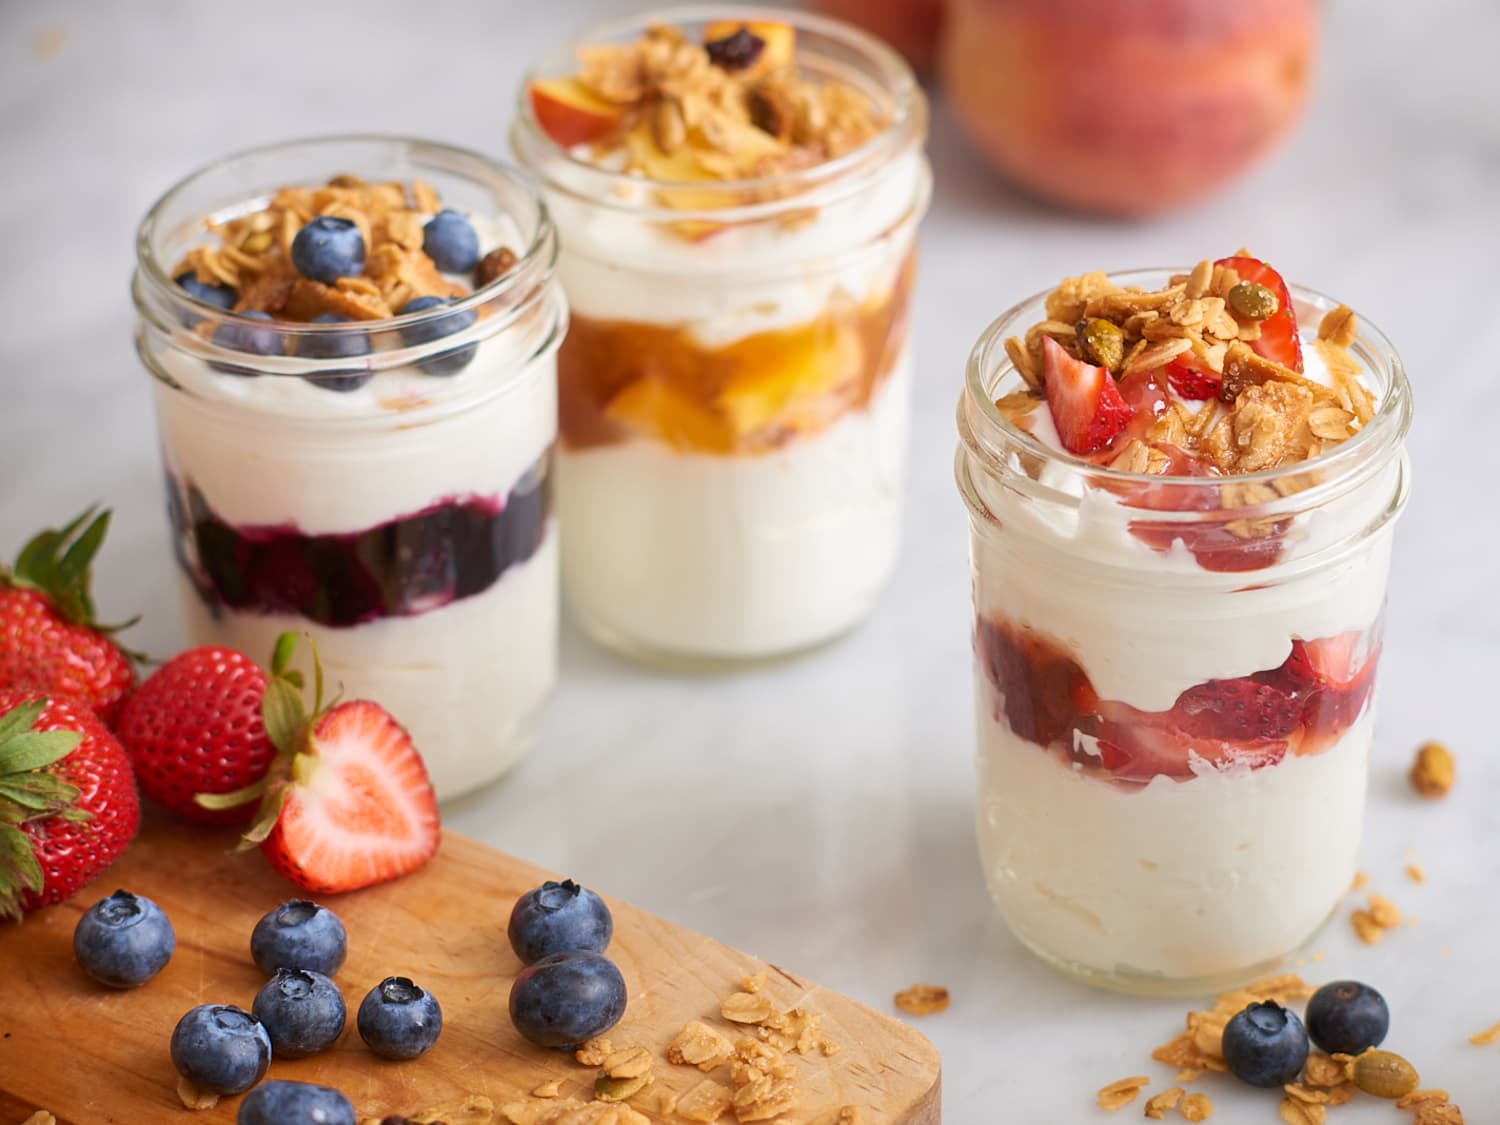 CRYSTALIA Yogurt Parfait Cups with Lids, Mini Breakfast On the Go